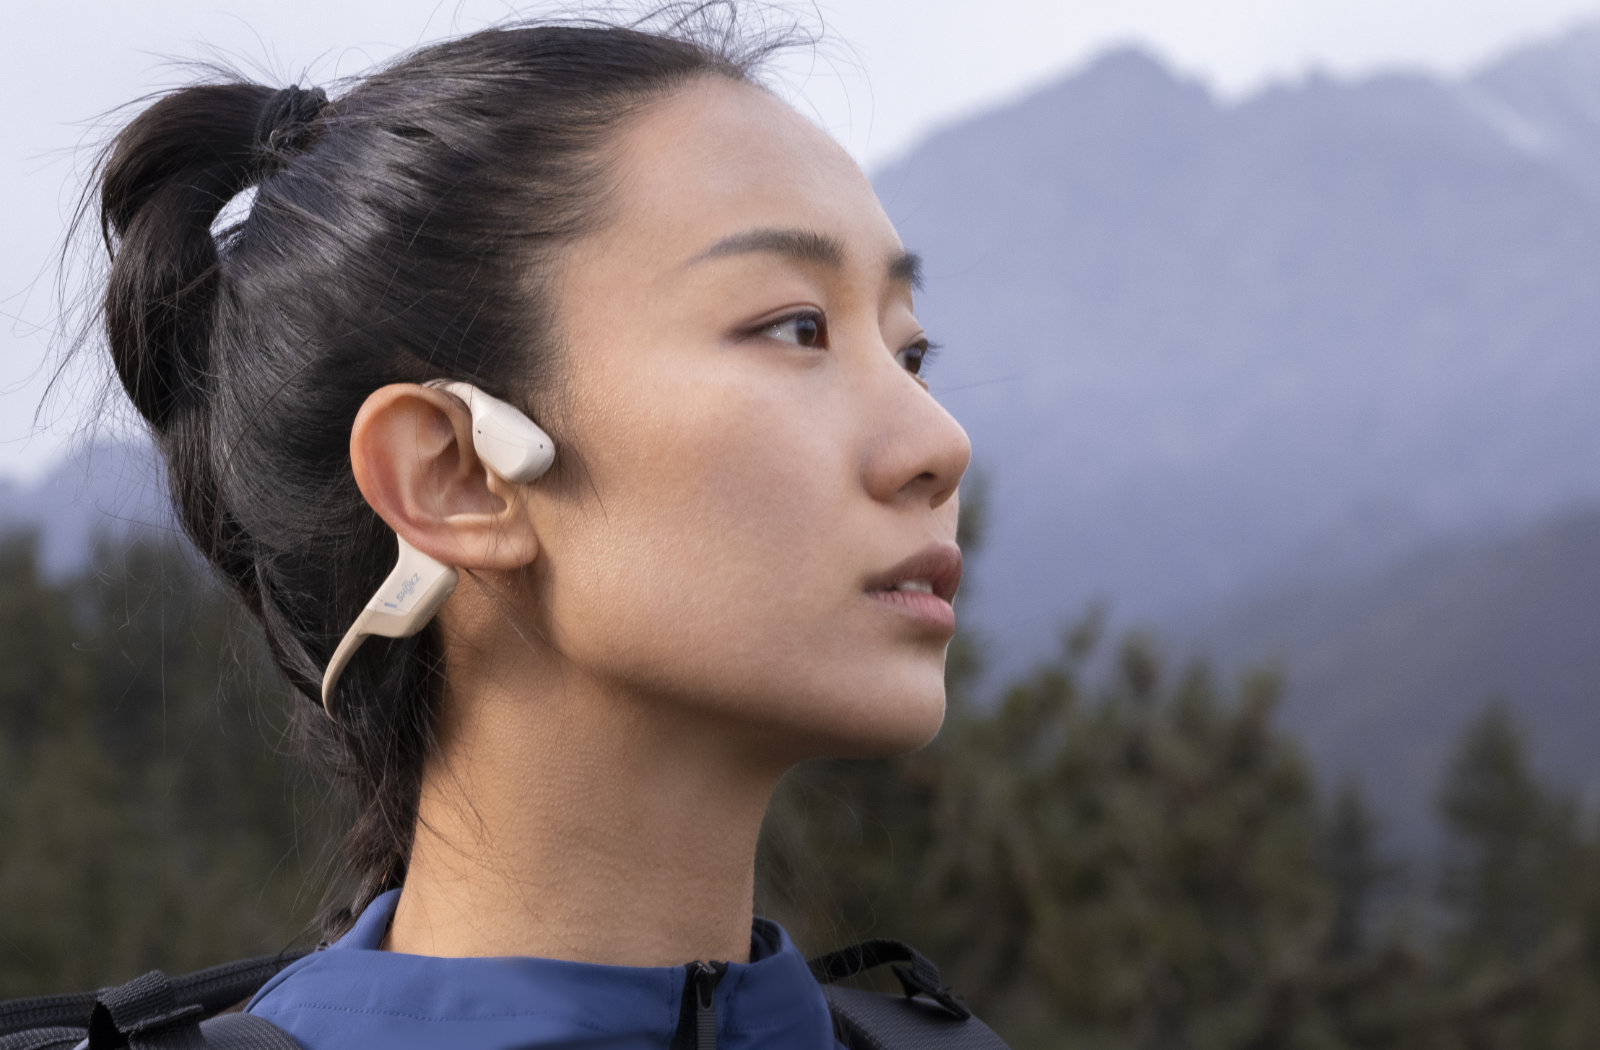 Bone conduction headphones start at EUR 189.95 – Archyworldys